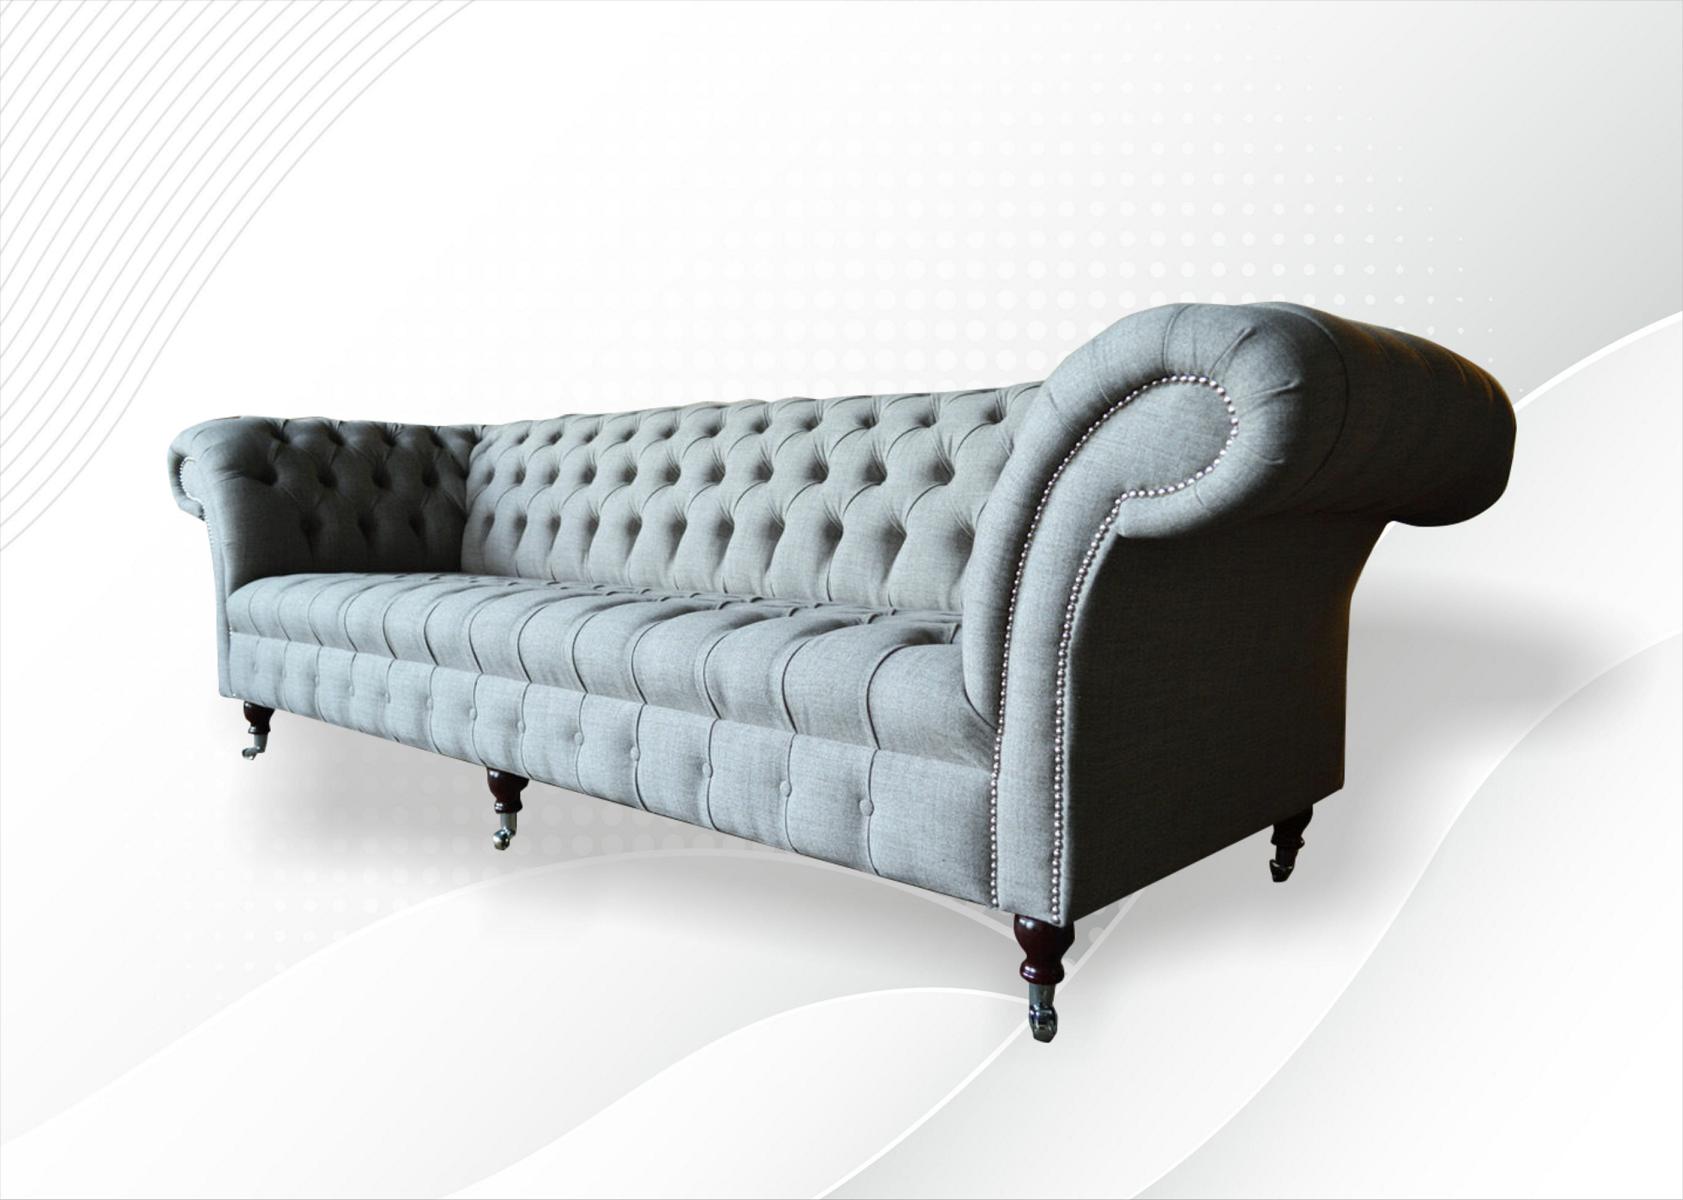 xxl Big Sofa Couch Chesterfield 265cm Polster Sofas 4 Sitzer Textil Modern